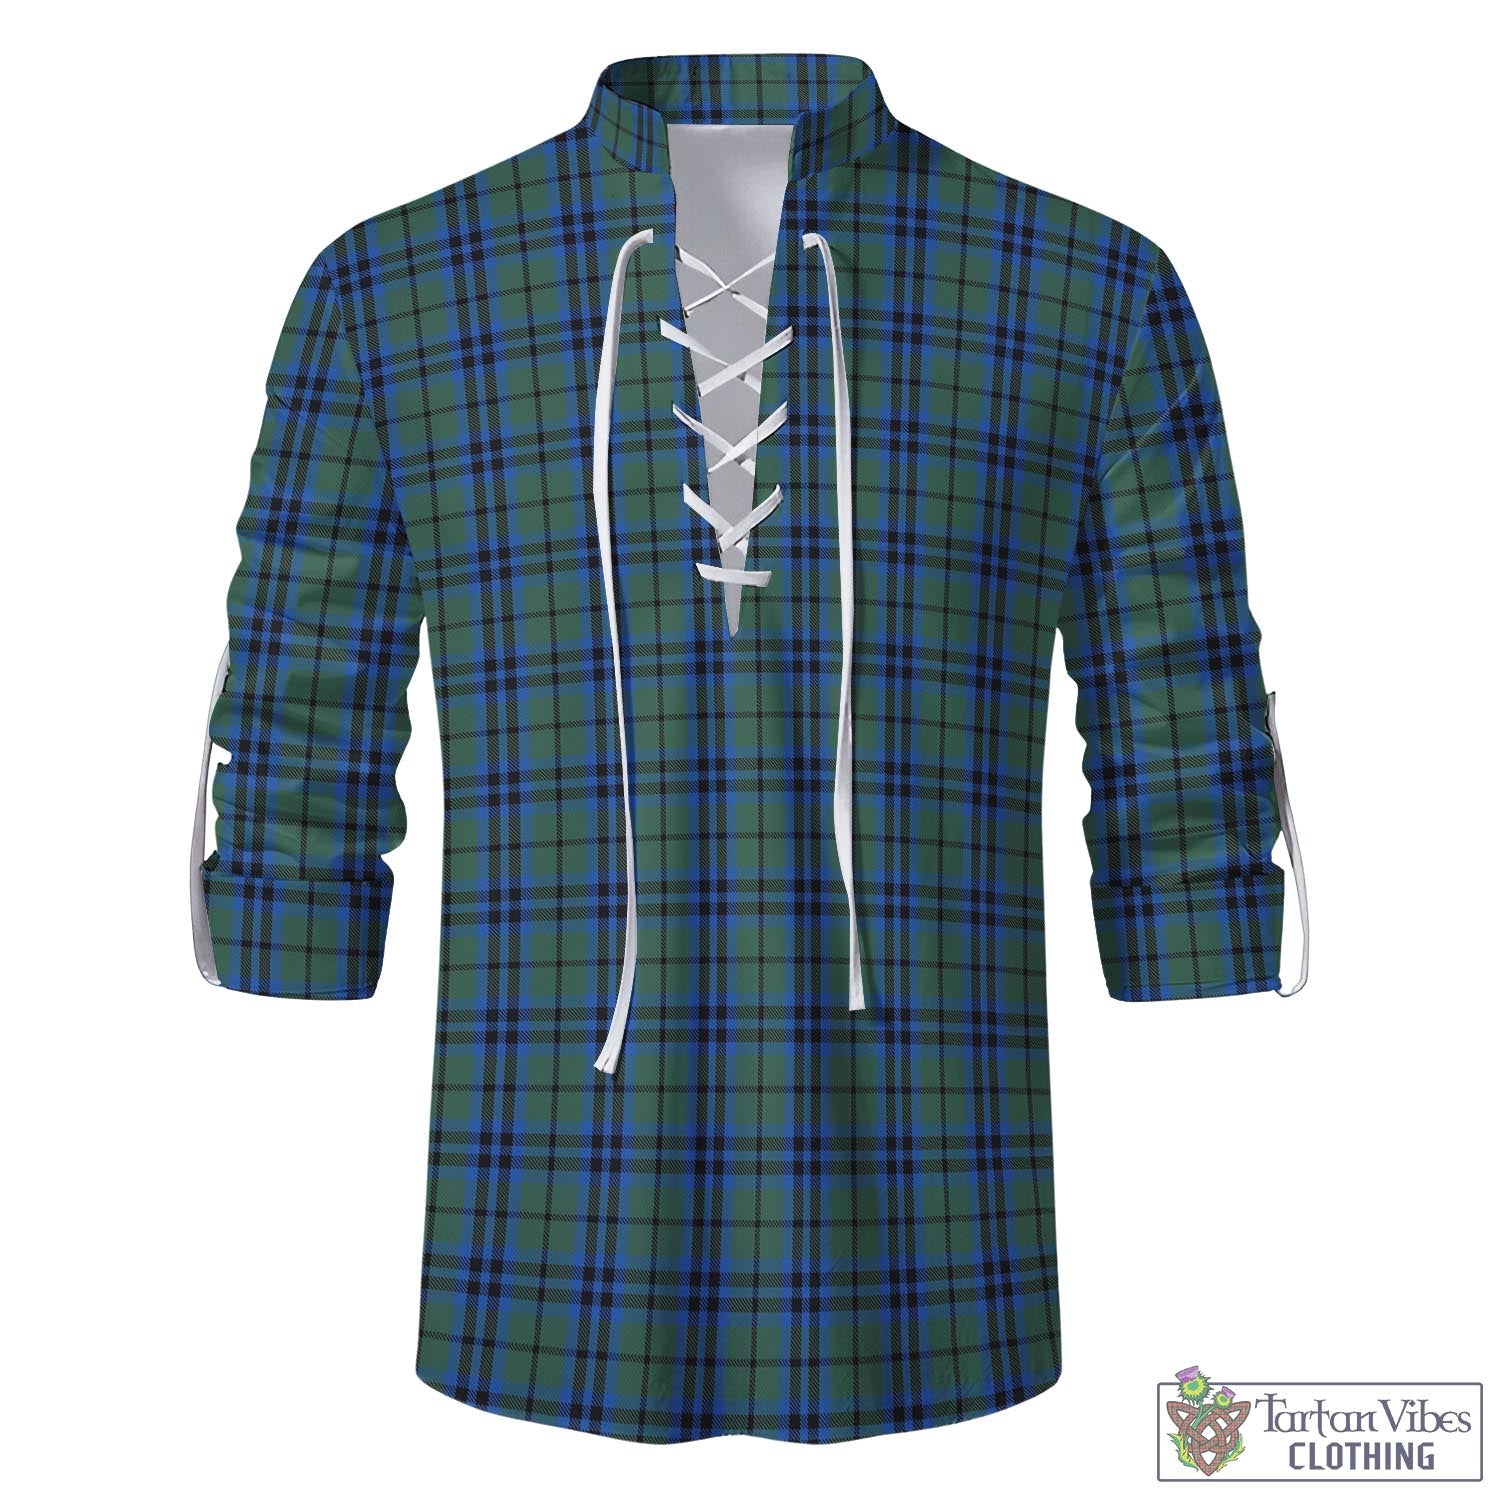 Tartan Vibes Clothing Marshall Tartan Men's Scottish Traditional Jacobite Ghillie Kilt Shirt